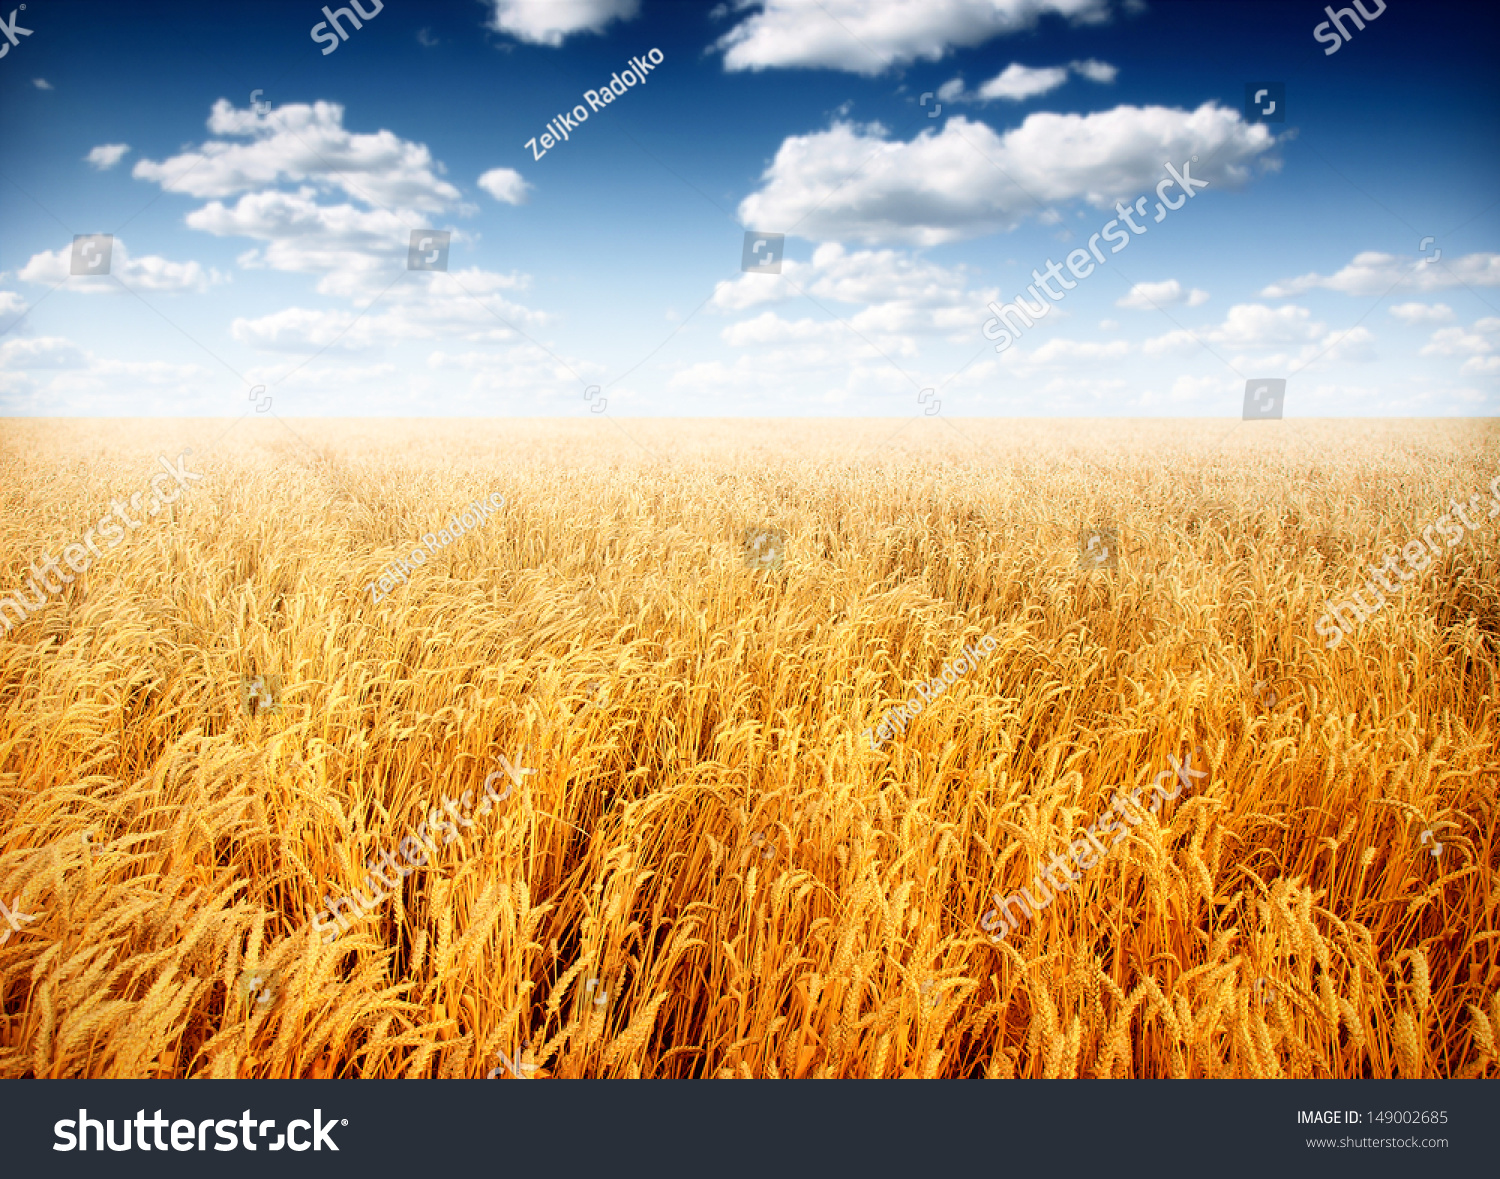 Wheat field against a blue sky #149002685